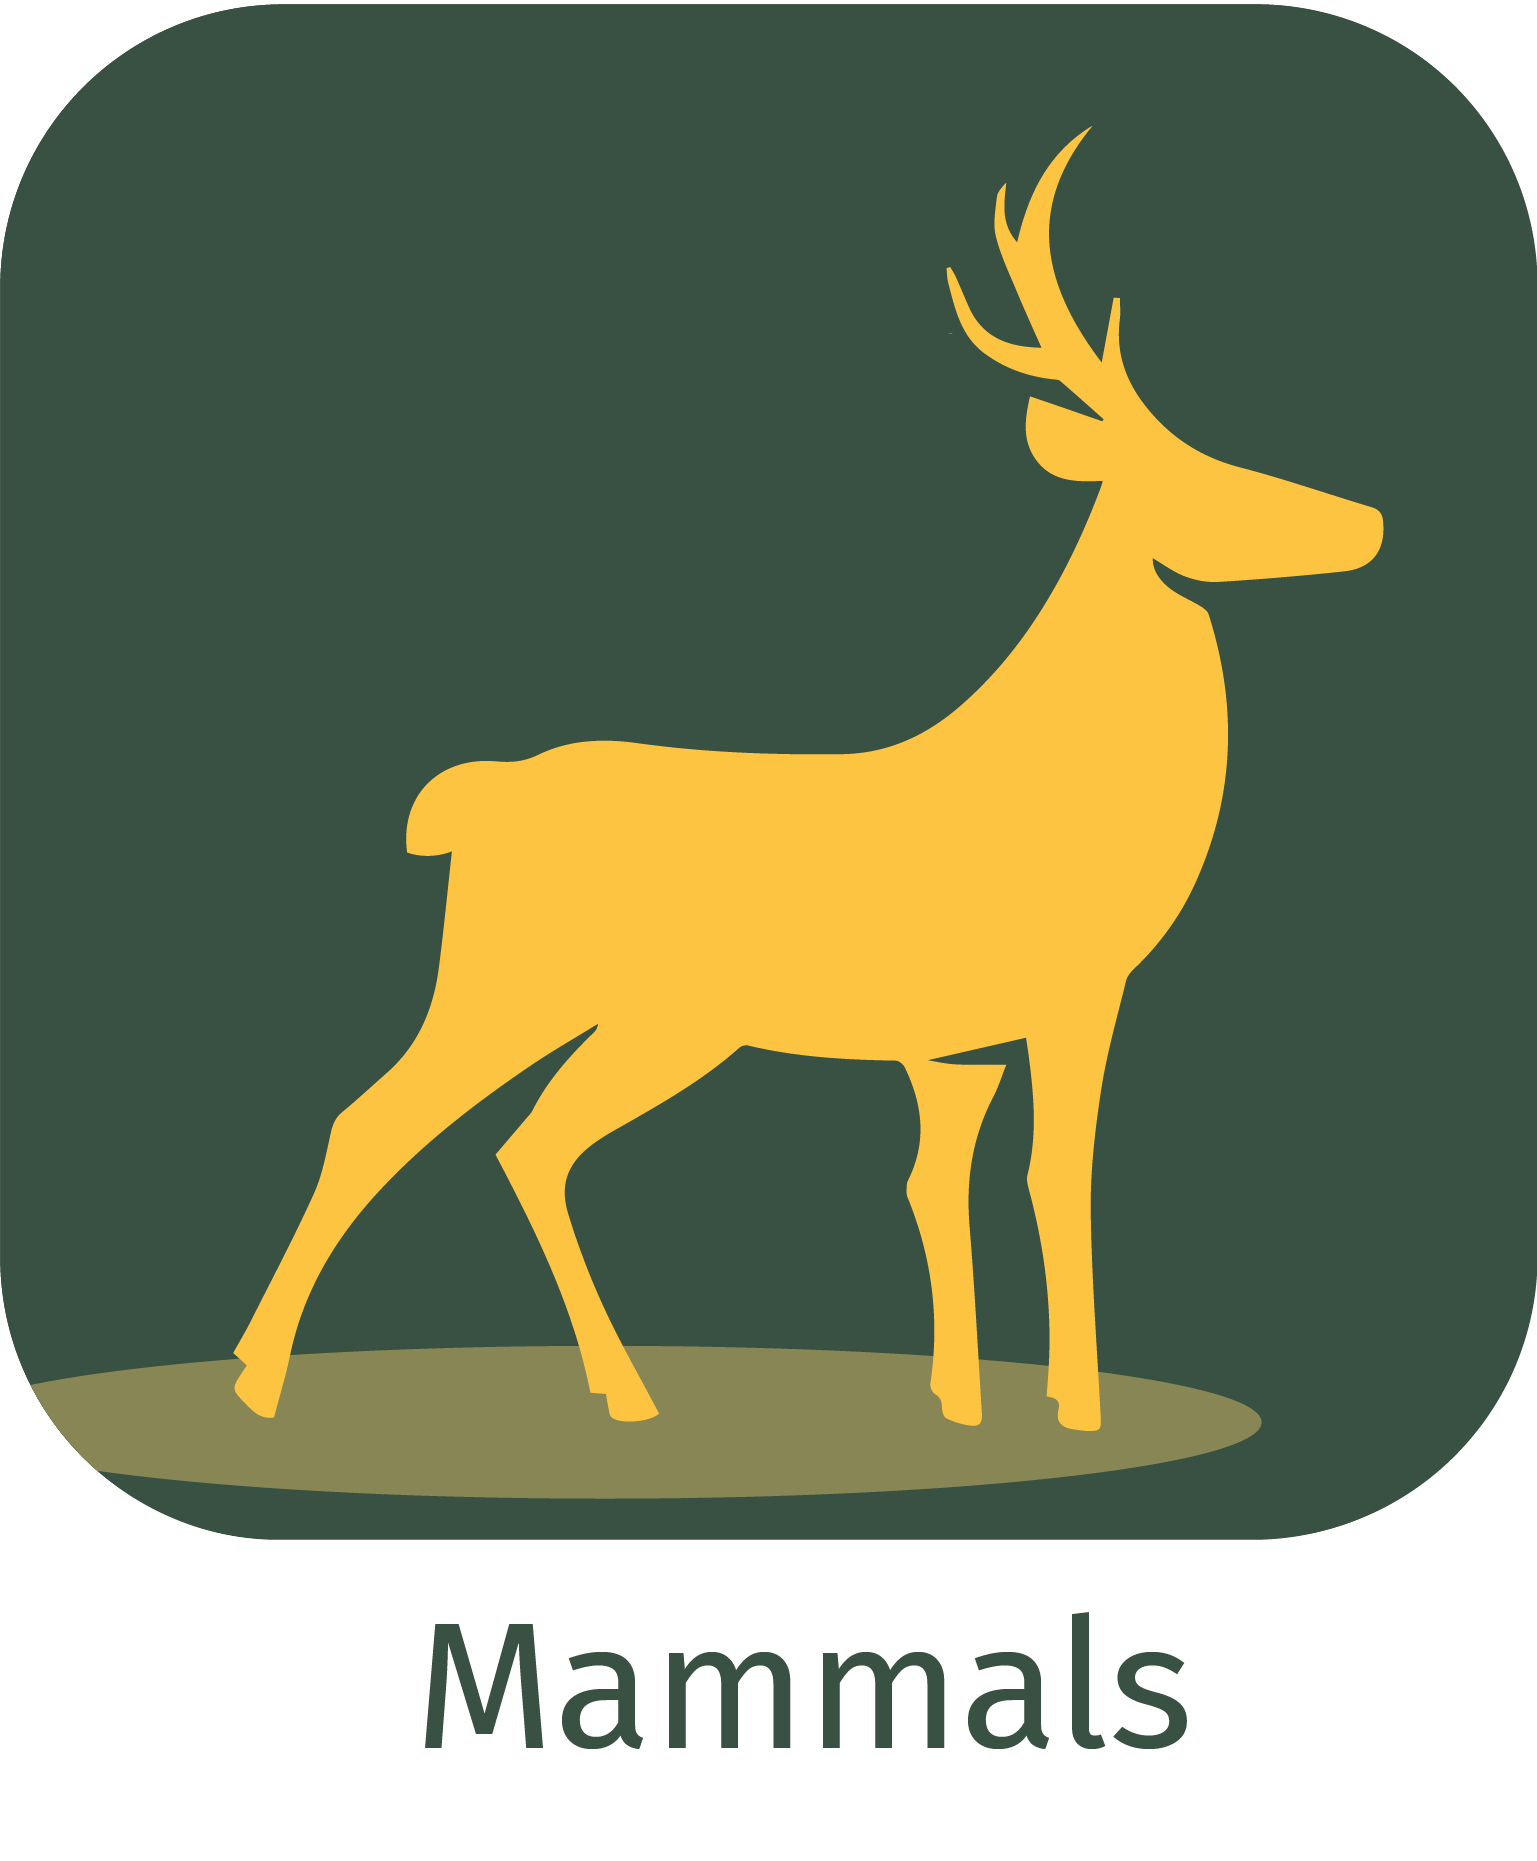 mammals app icon